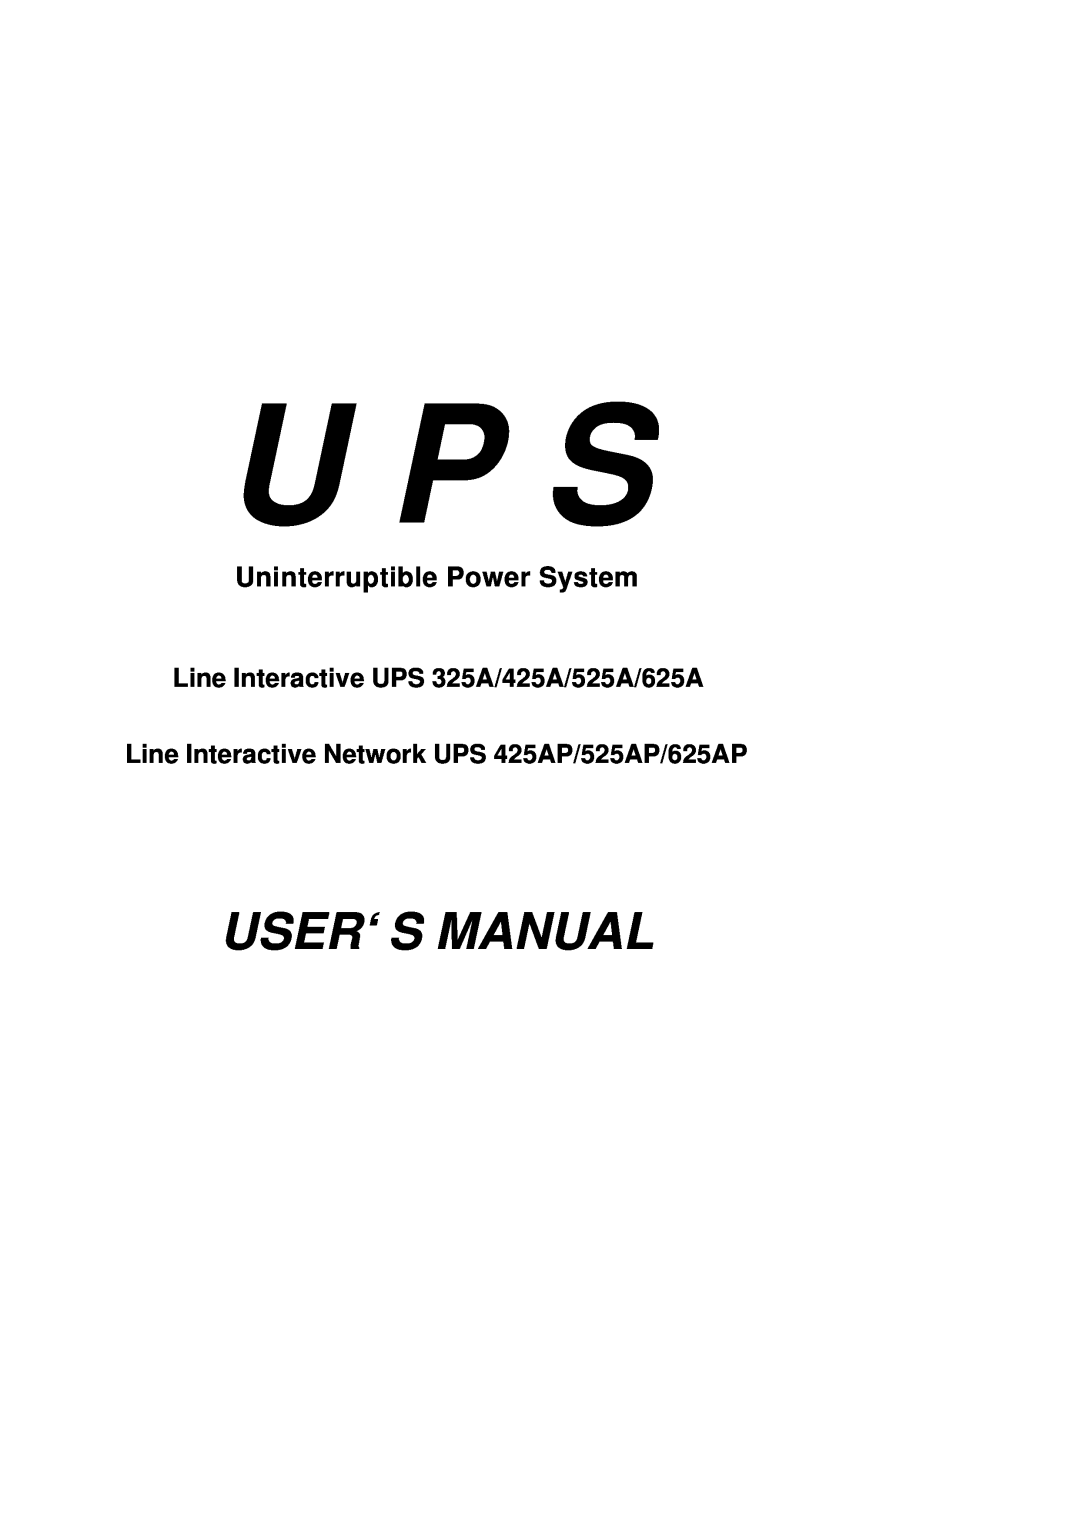 Powercom 525AP user manual U P S, User‘S Manual, Uninterruptible Power System, Line Interactive UPS 325A/425A/525A/625A 